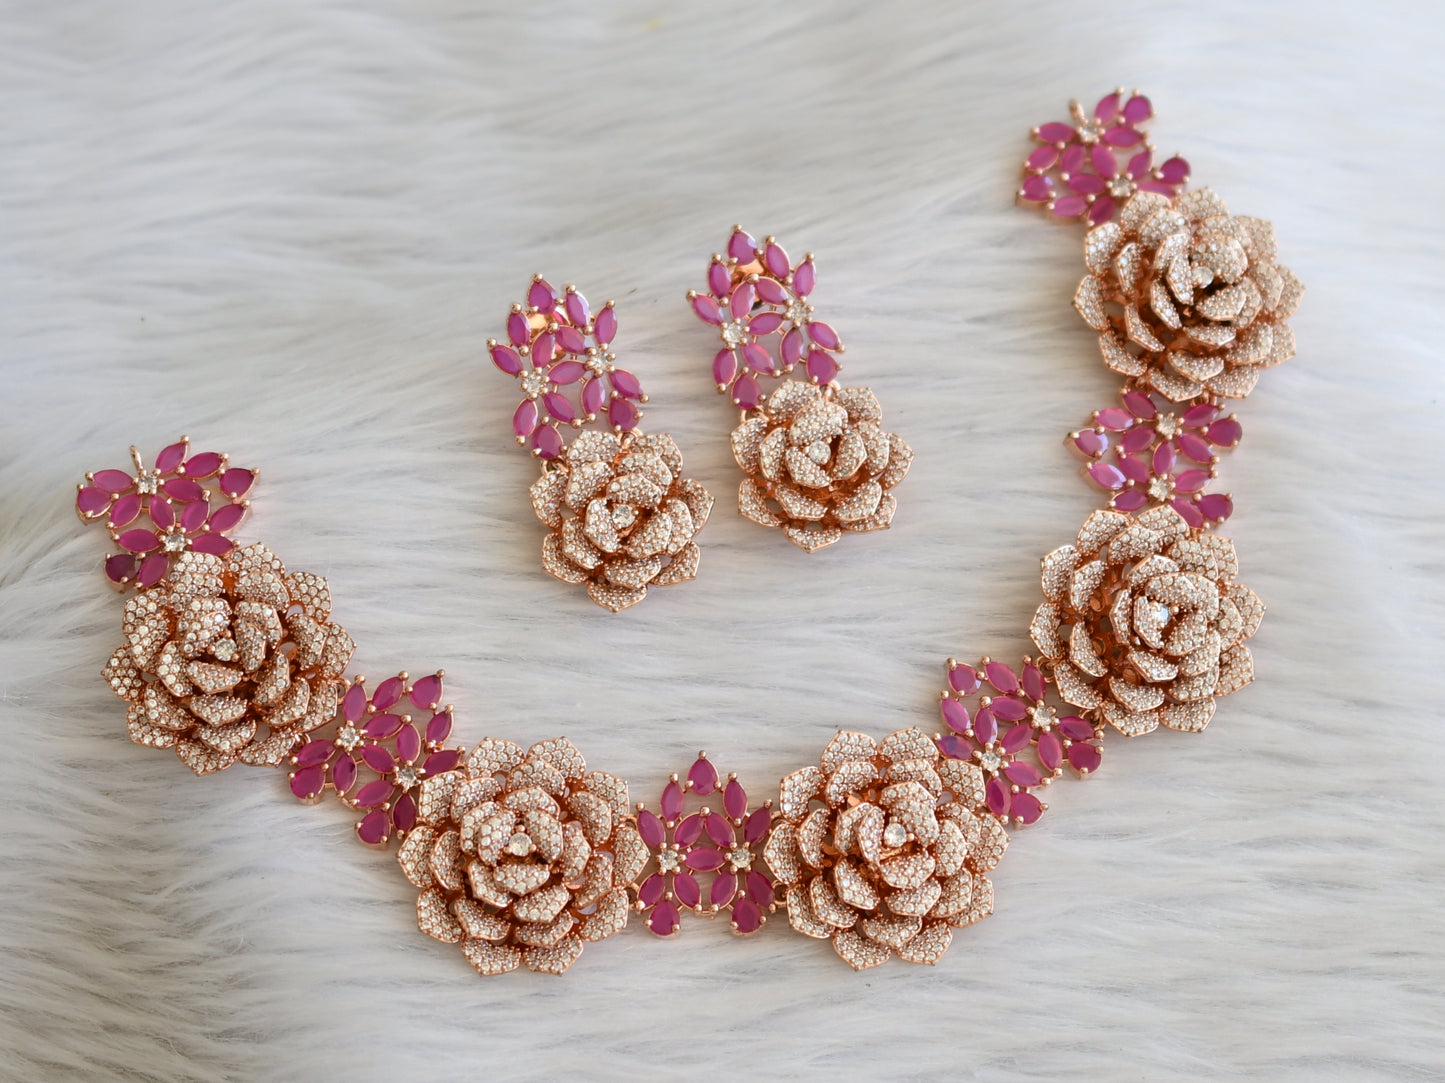 Rose gold tone ruby-white flower necklace set dj-45399